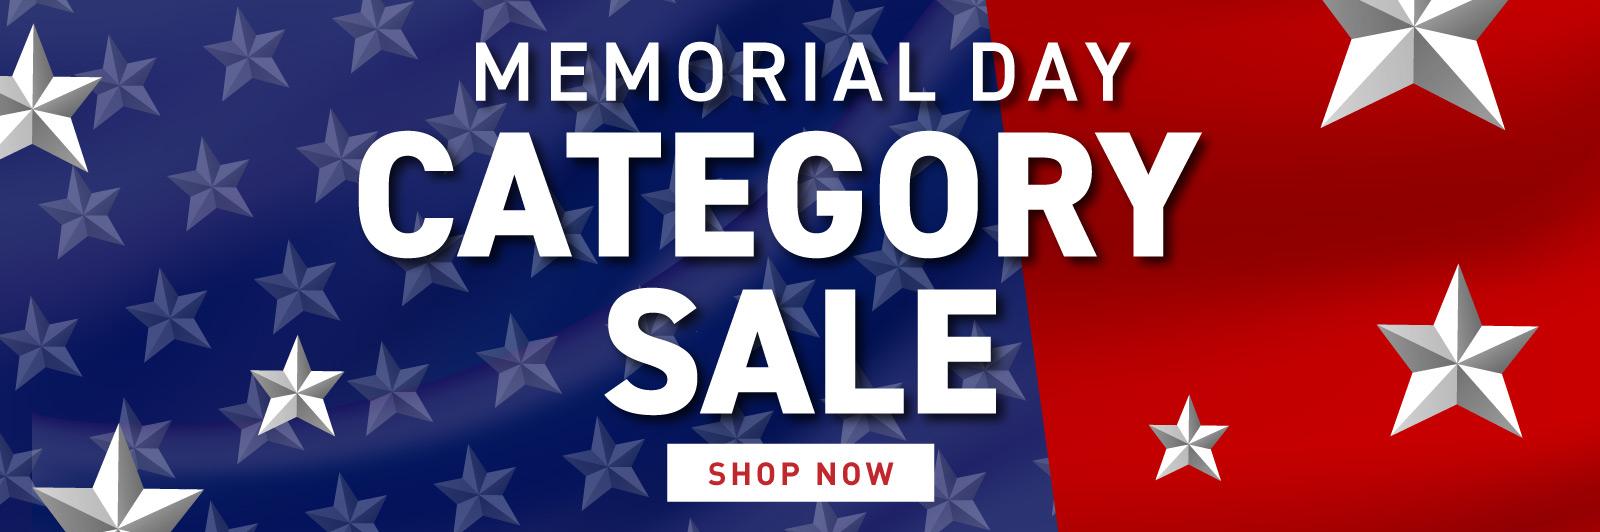 Memorial Day Sales, Deals, Offers